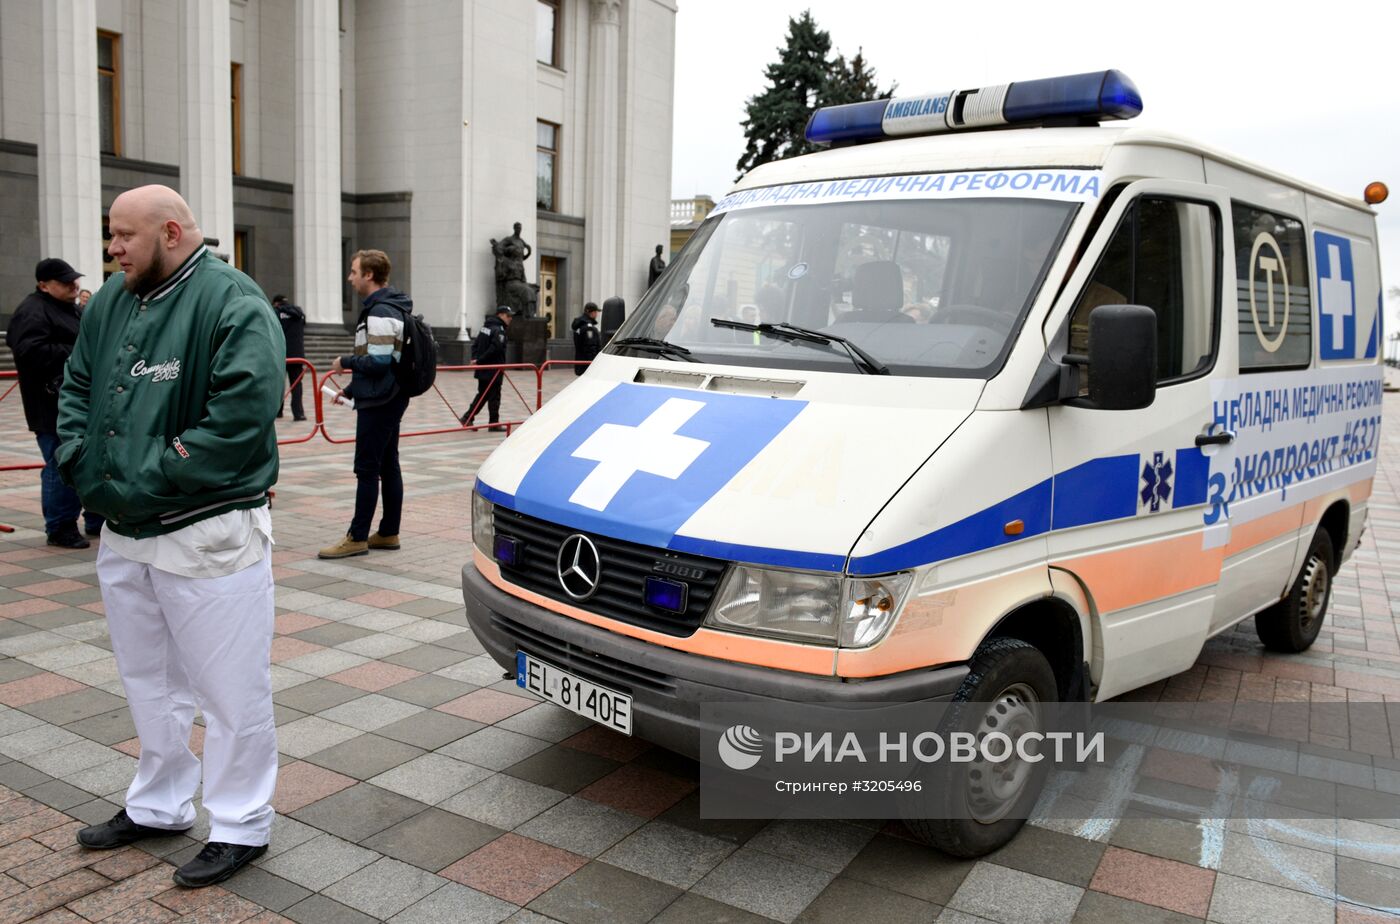 Акция протеста медицинских работников в Киеве